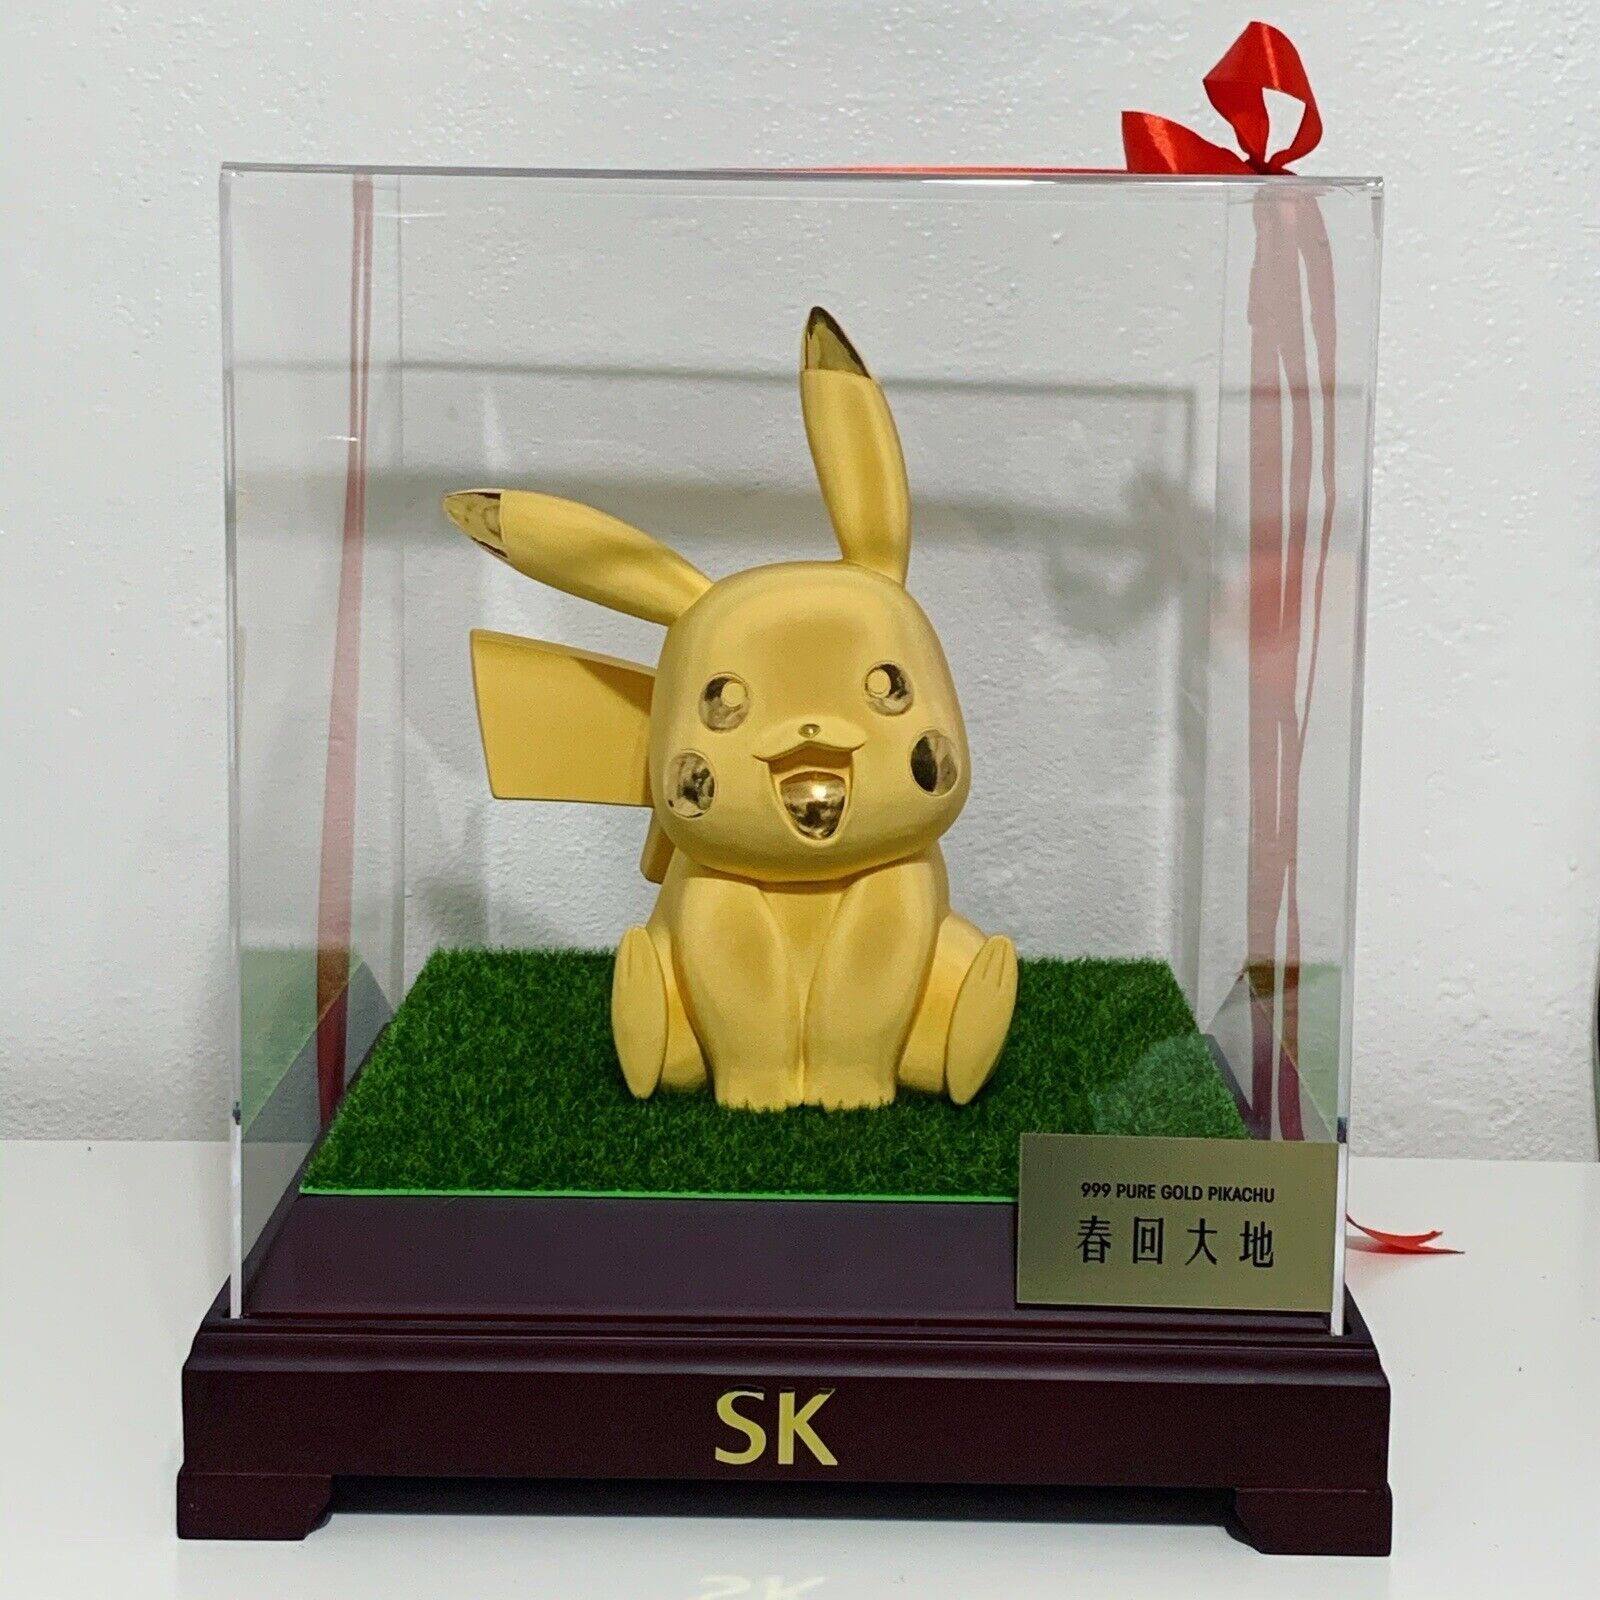 Pikachu 999 Pure Gold Pokemon Figure SK Jewellery